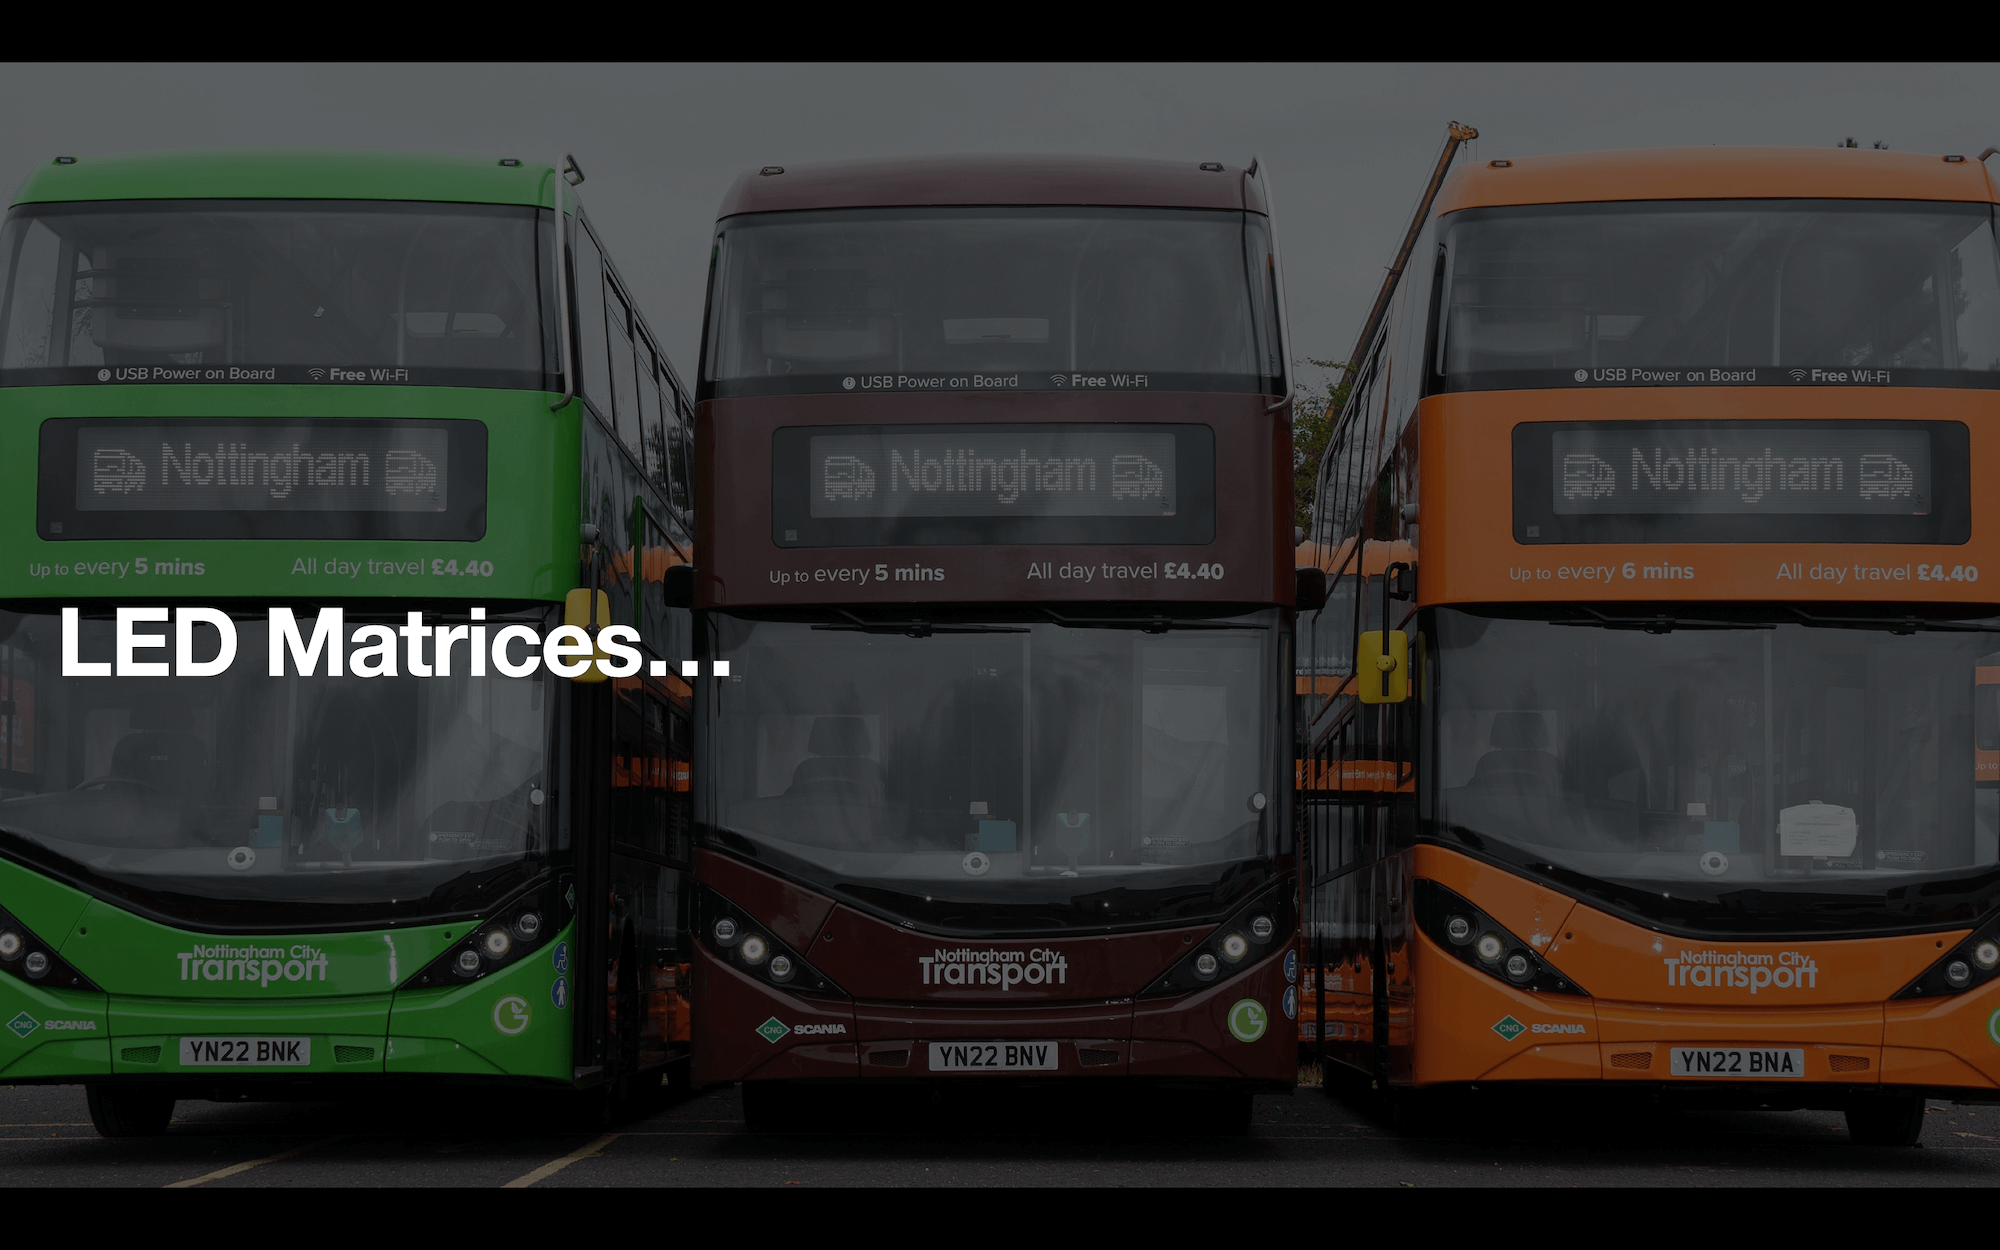 Buses with LED matrix destination displays